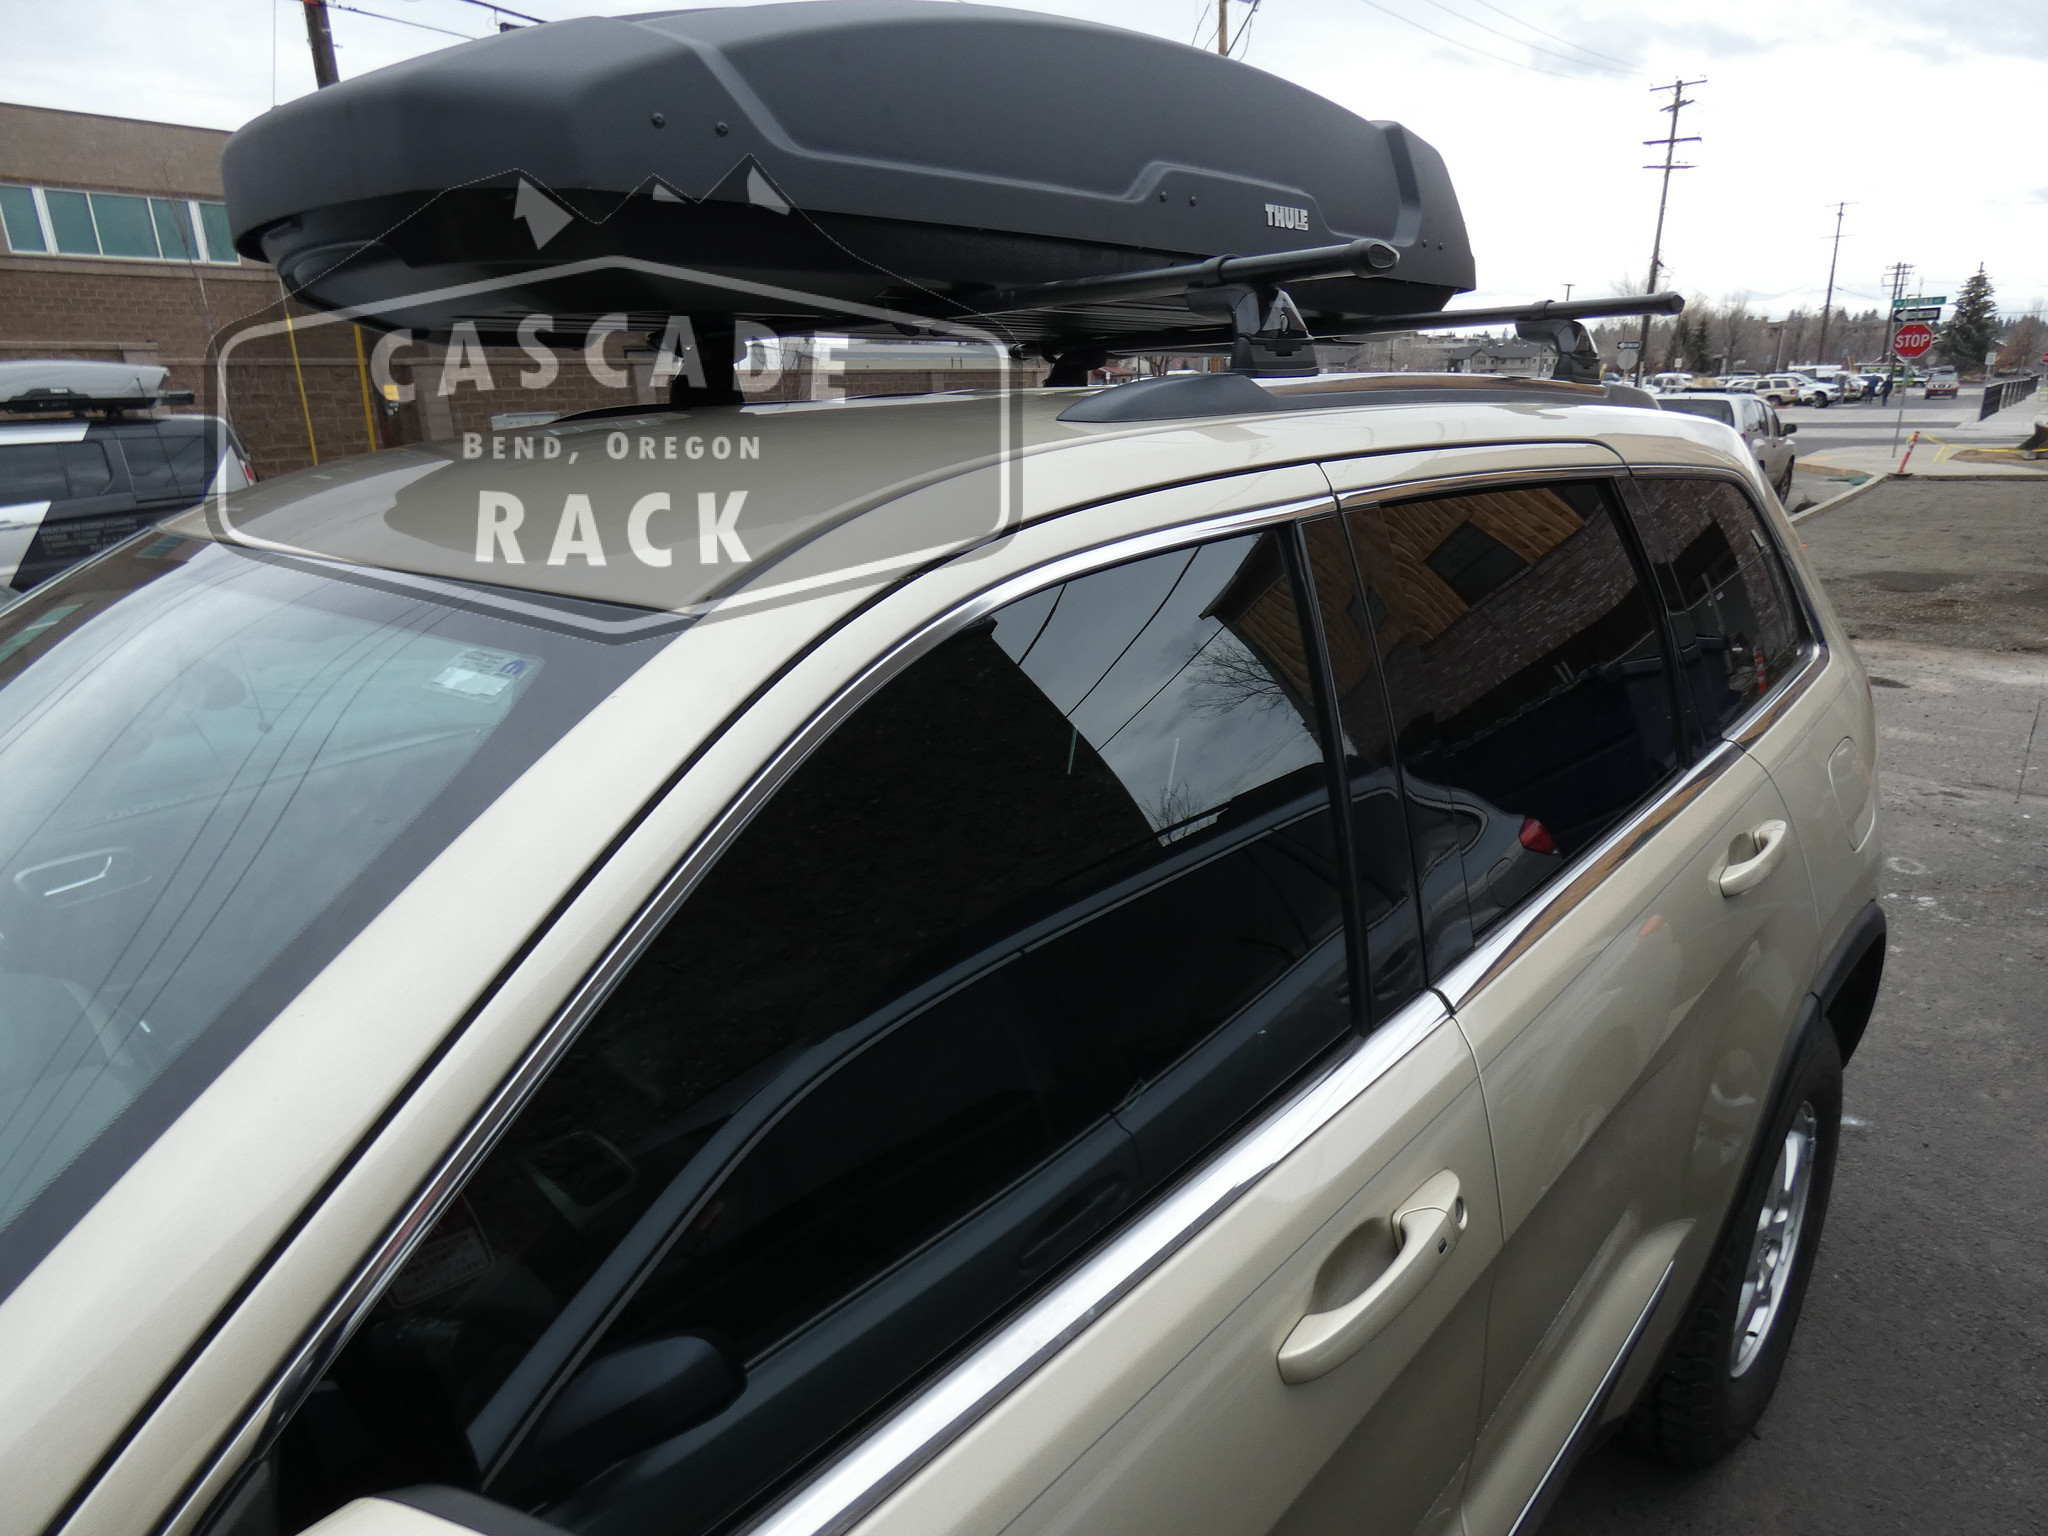 2014 Jeep Grand Cherokee - Base Rack and Cargo Box - Yakima / Thule